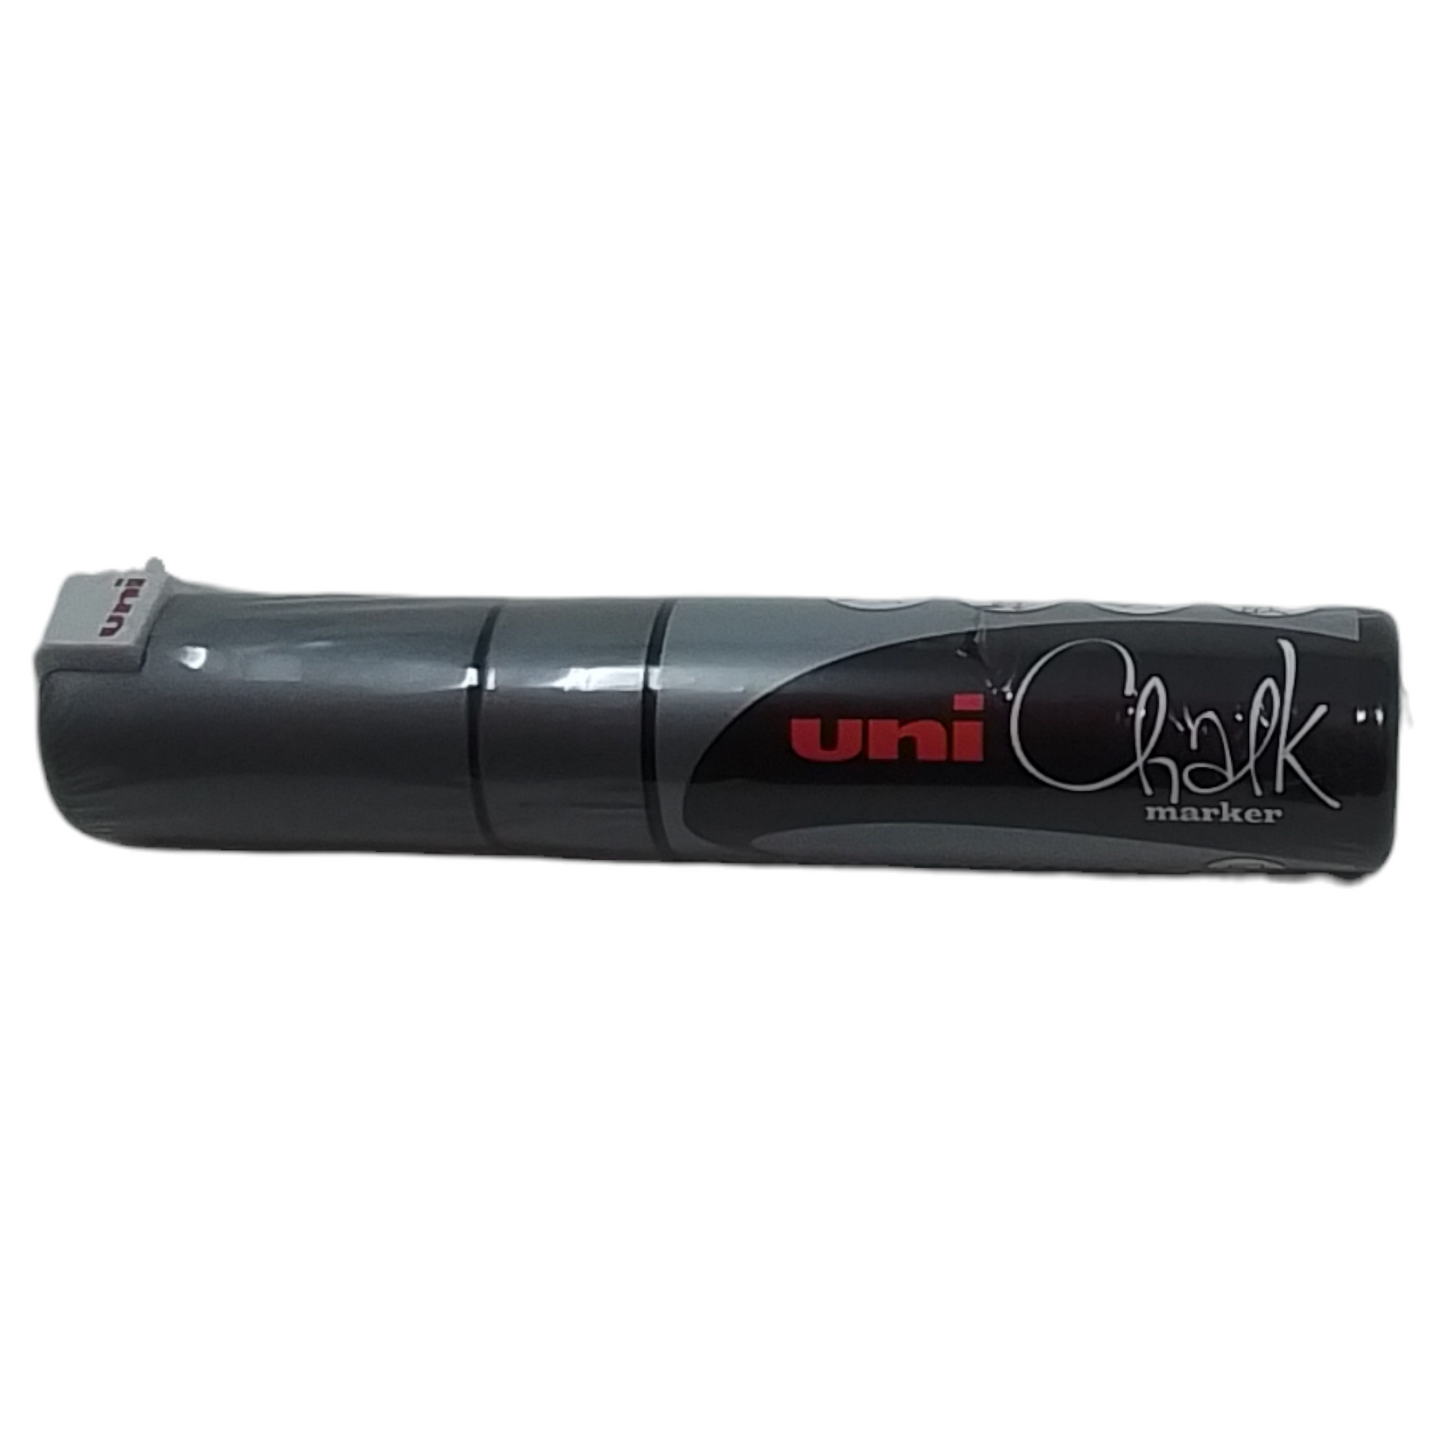 UNI Chalk 8mm - Pennarelli per lavagna